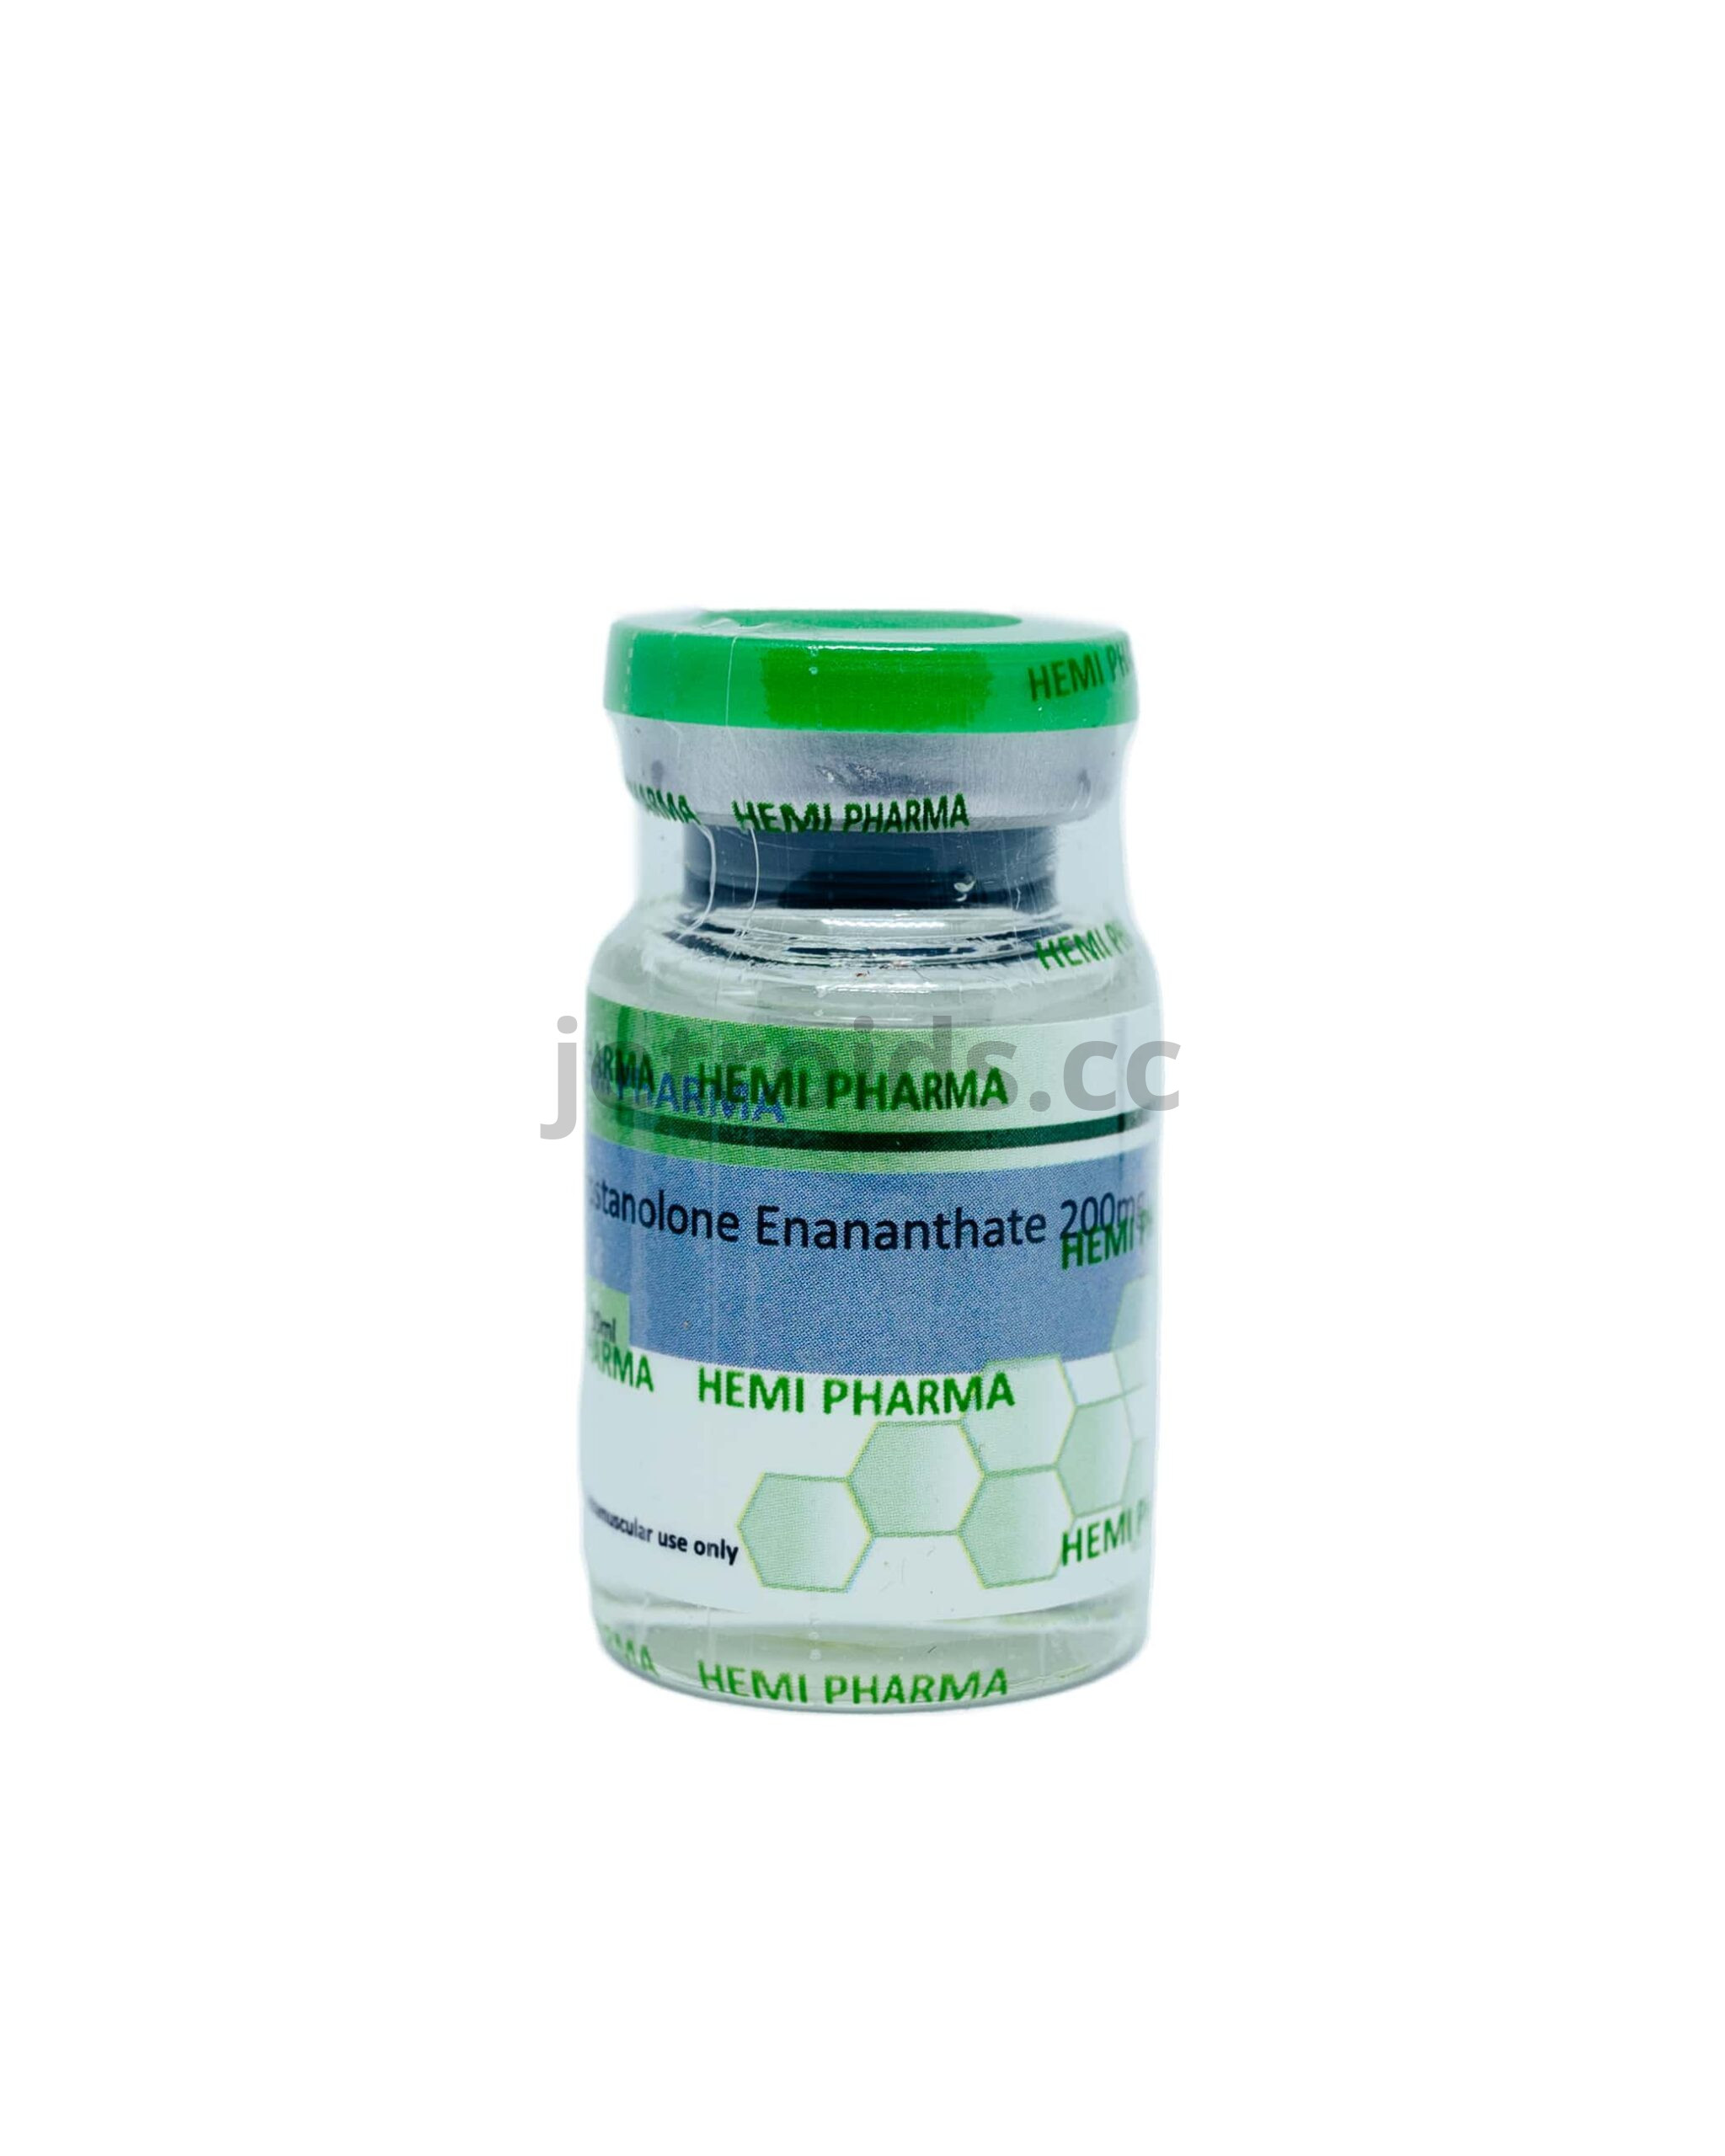 Hemi Pharma Drostanolone Enananthate 200 Product Info